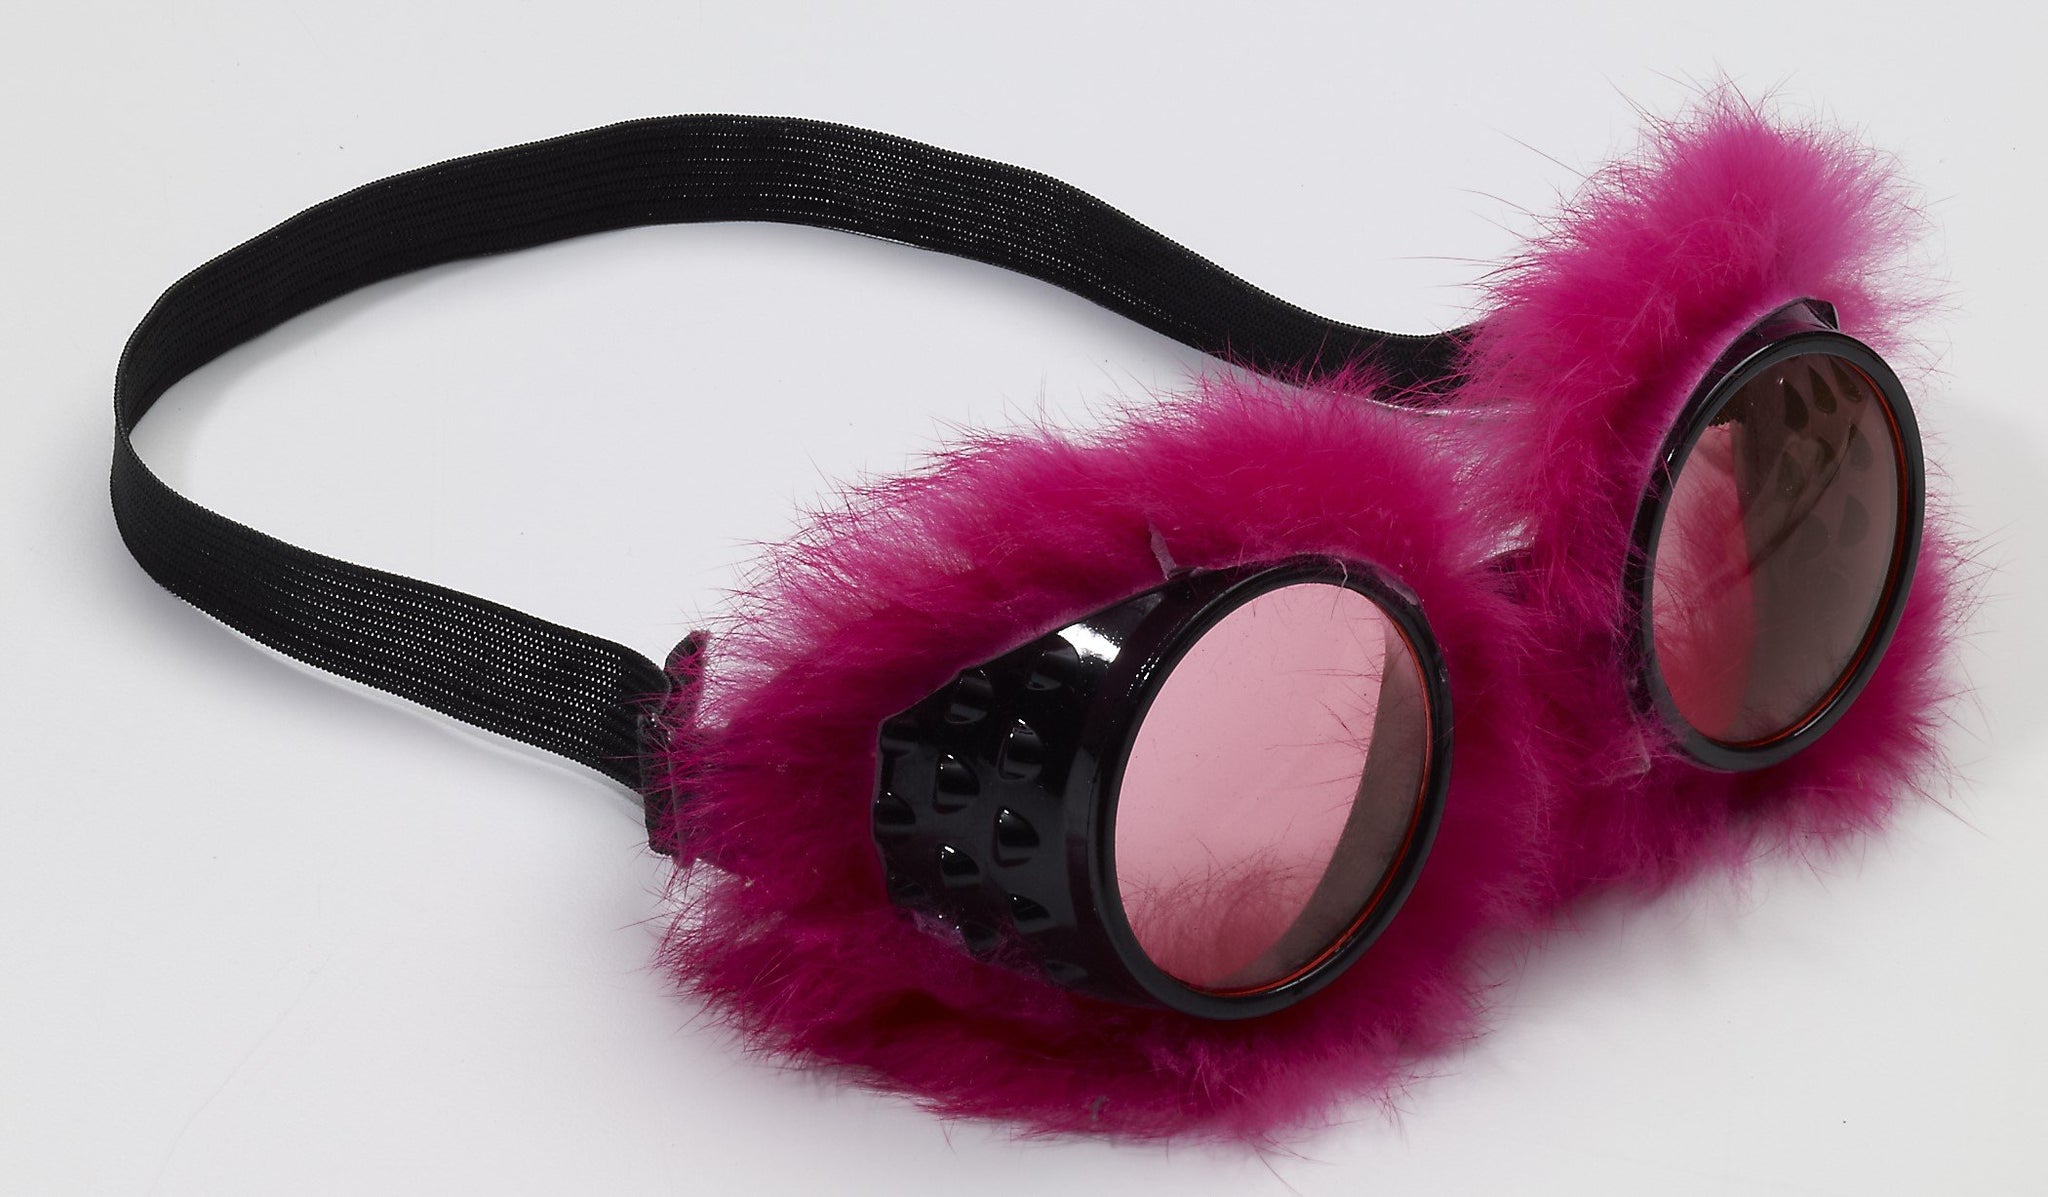 Pink fur around goggles, black strap